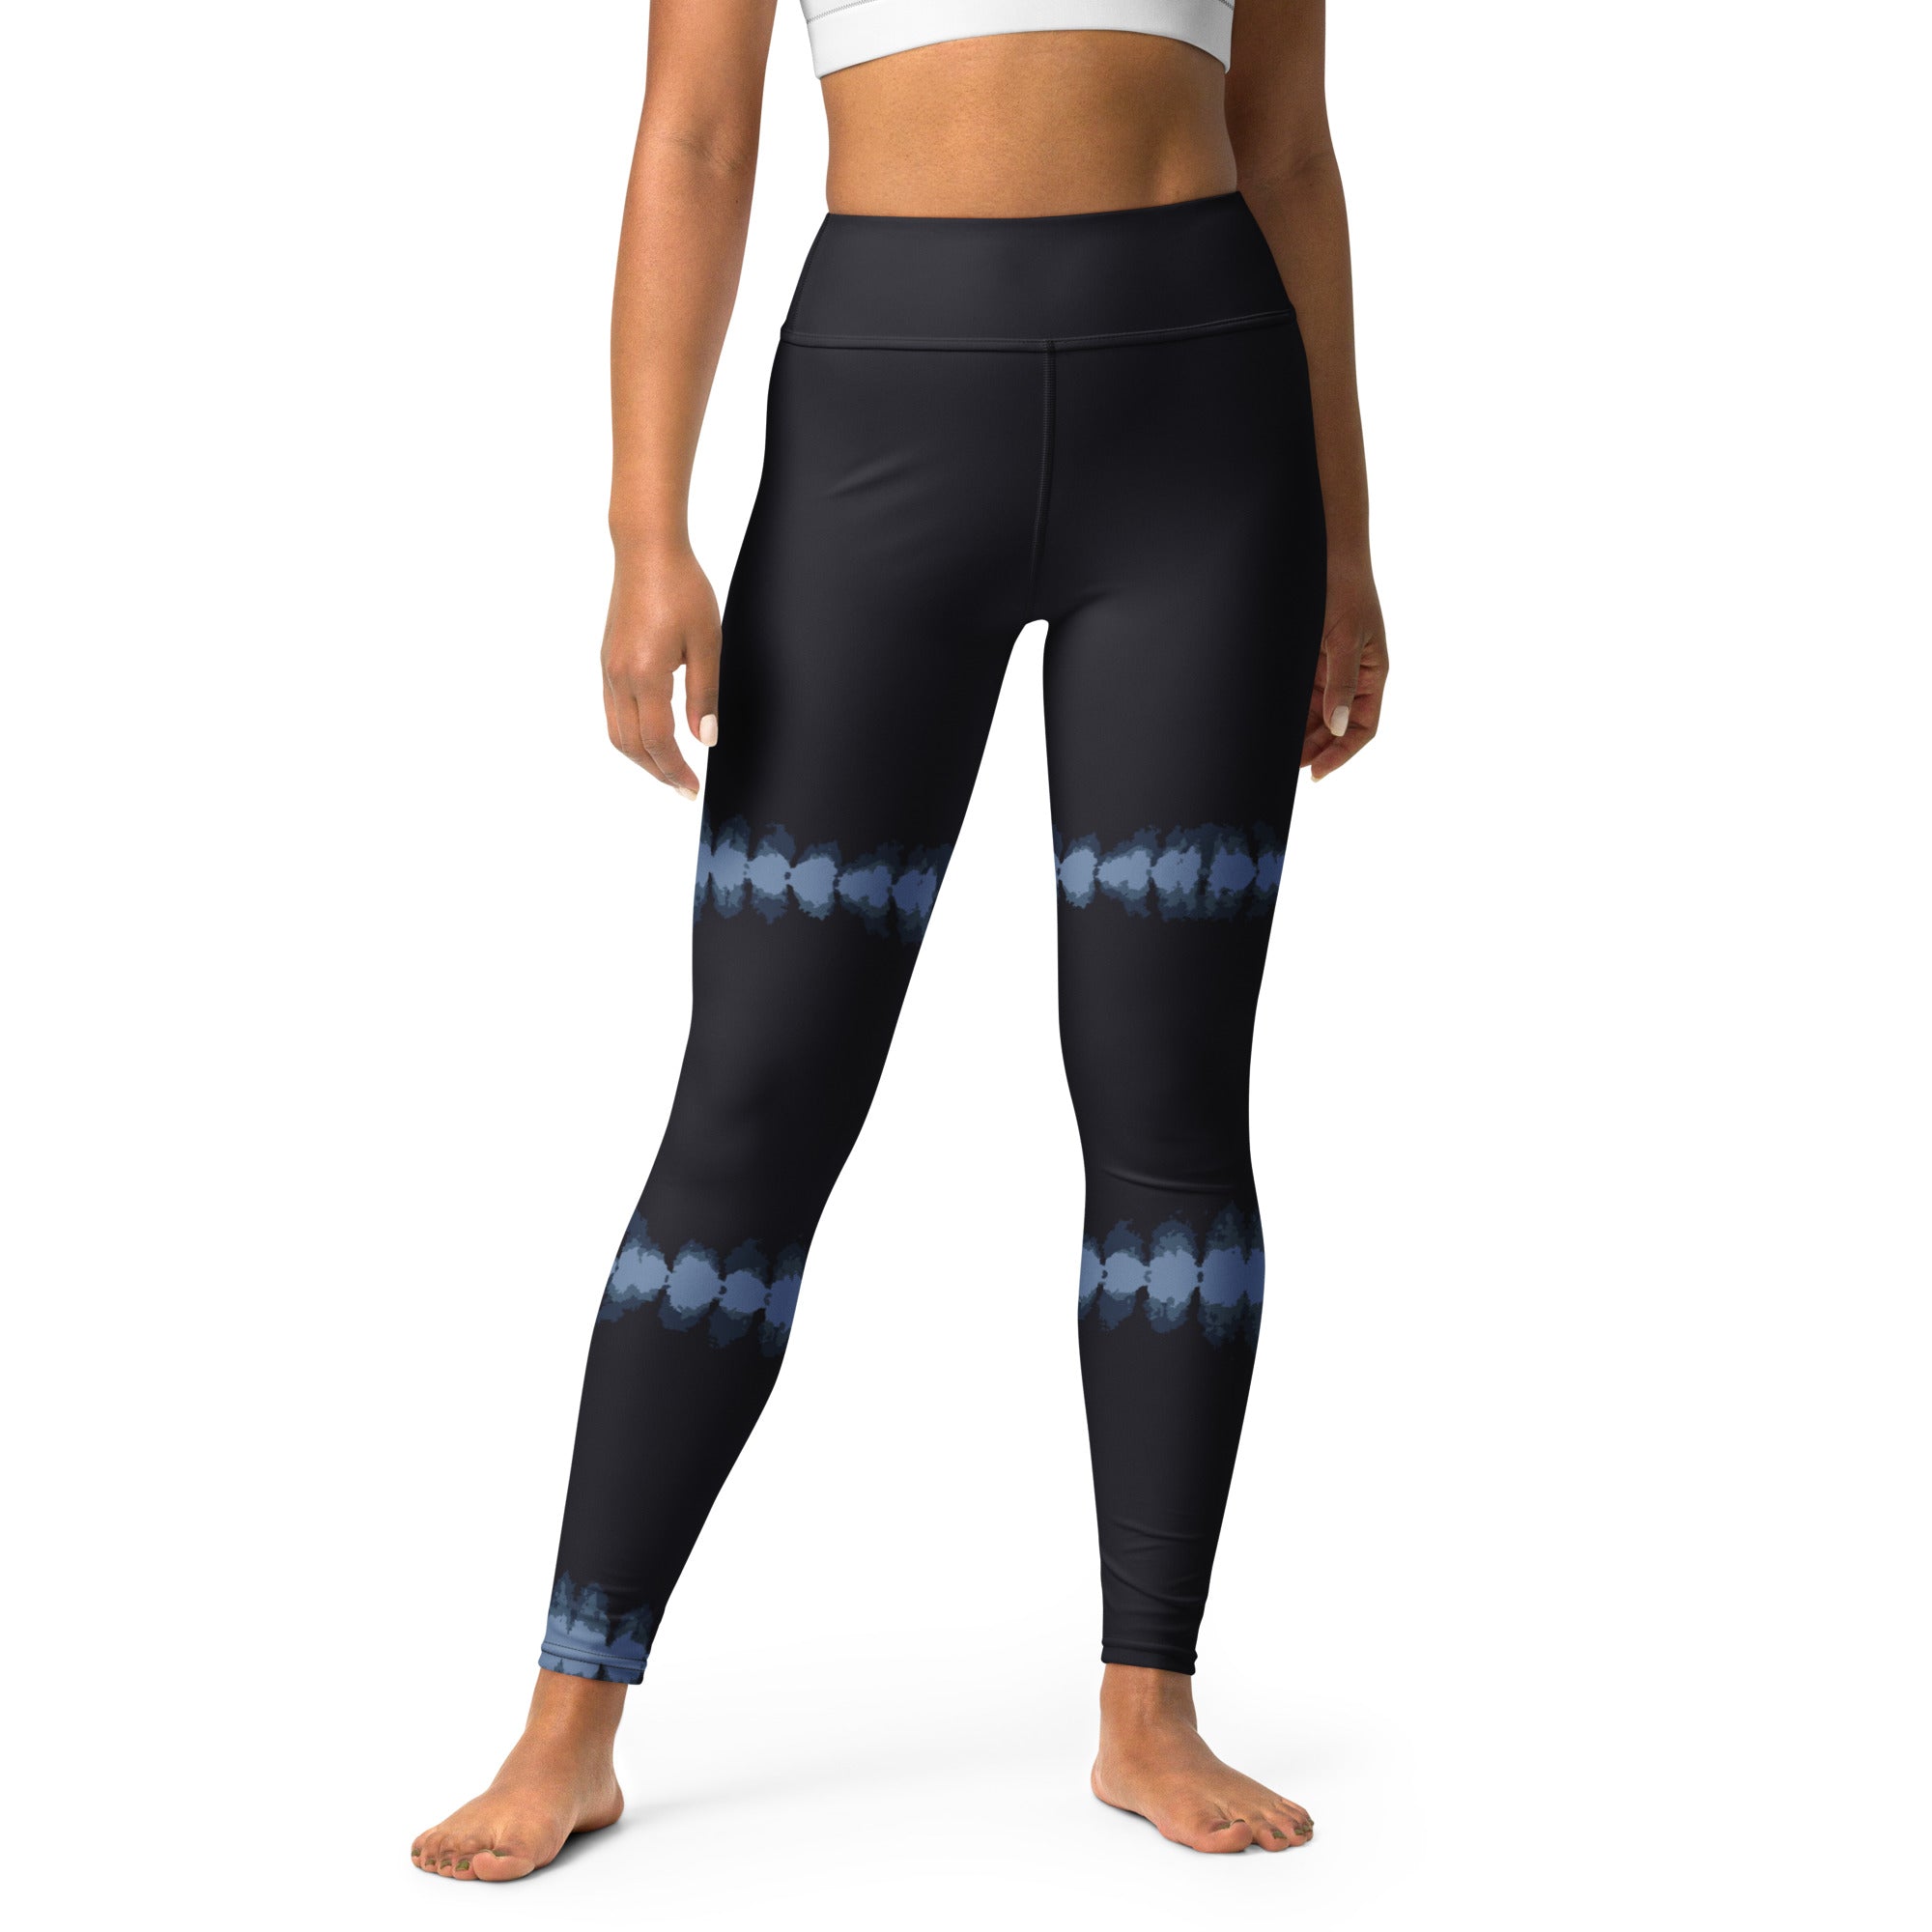 Yoga Ombre Seamless Leggings indigo/black - Buy Print Leggings